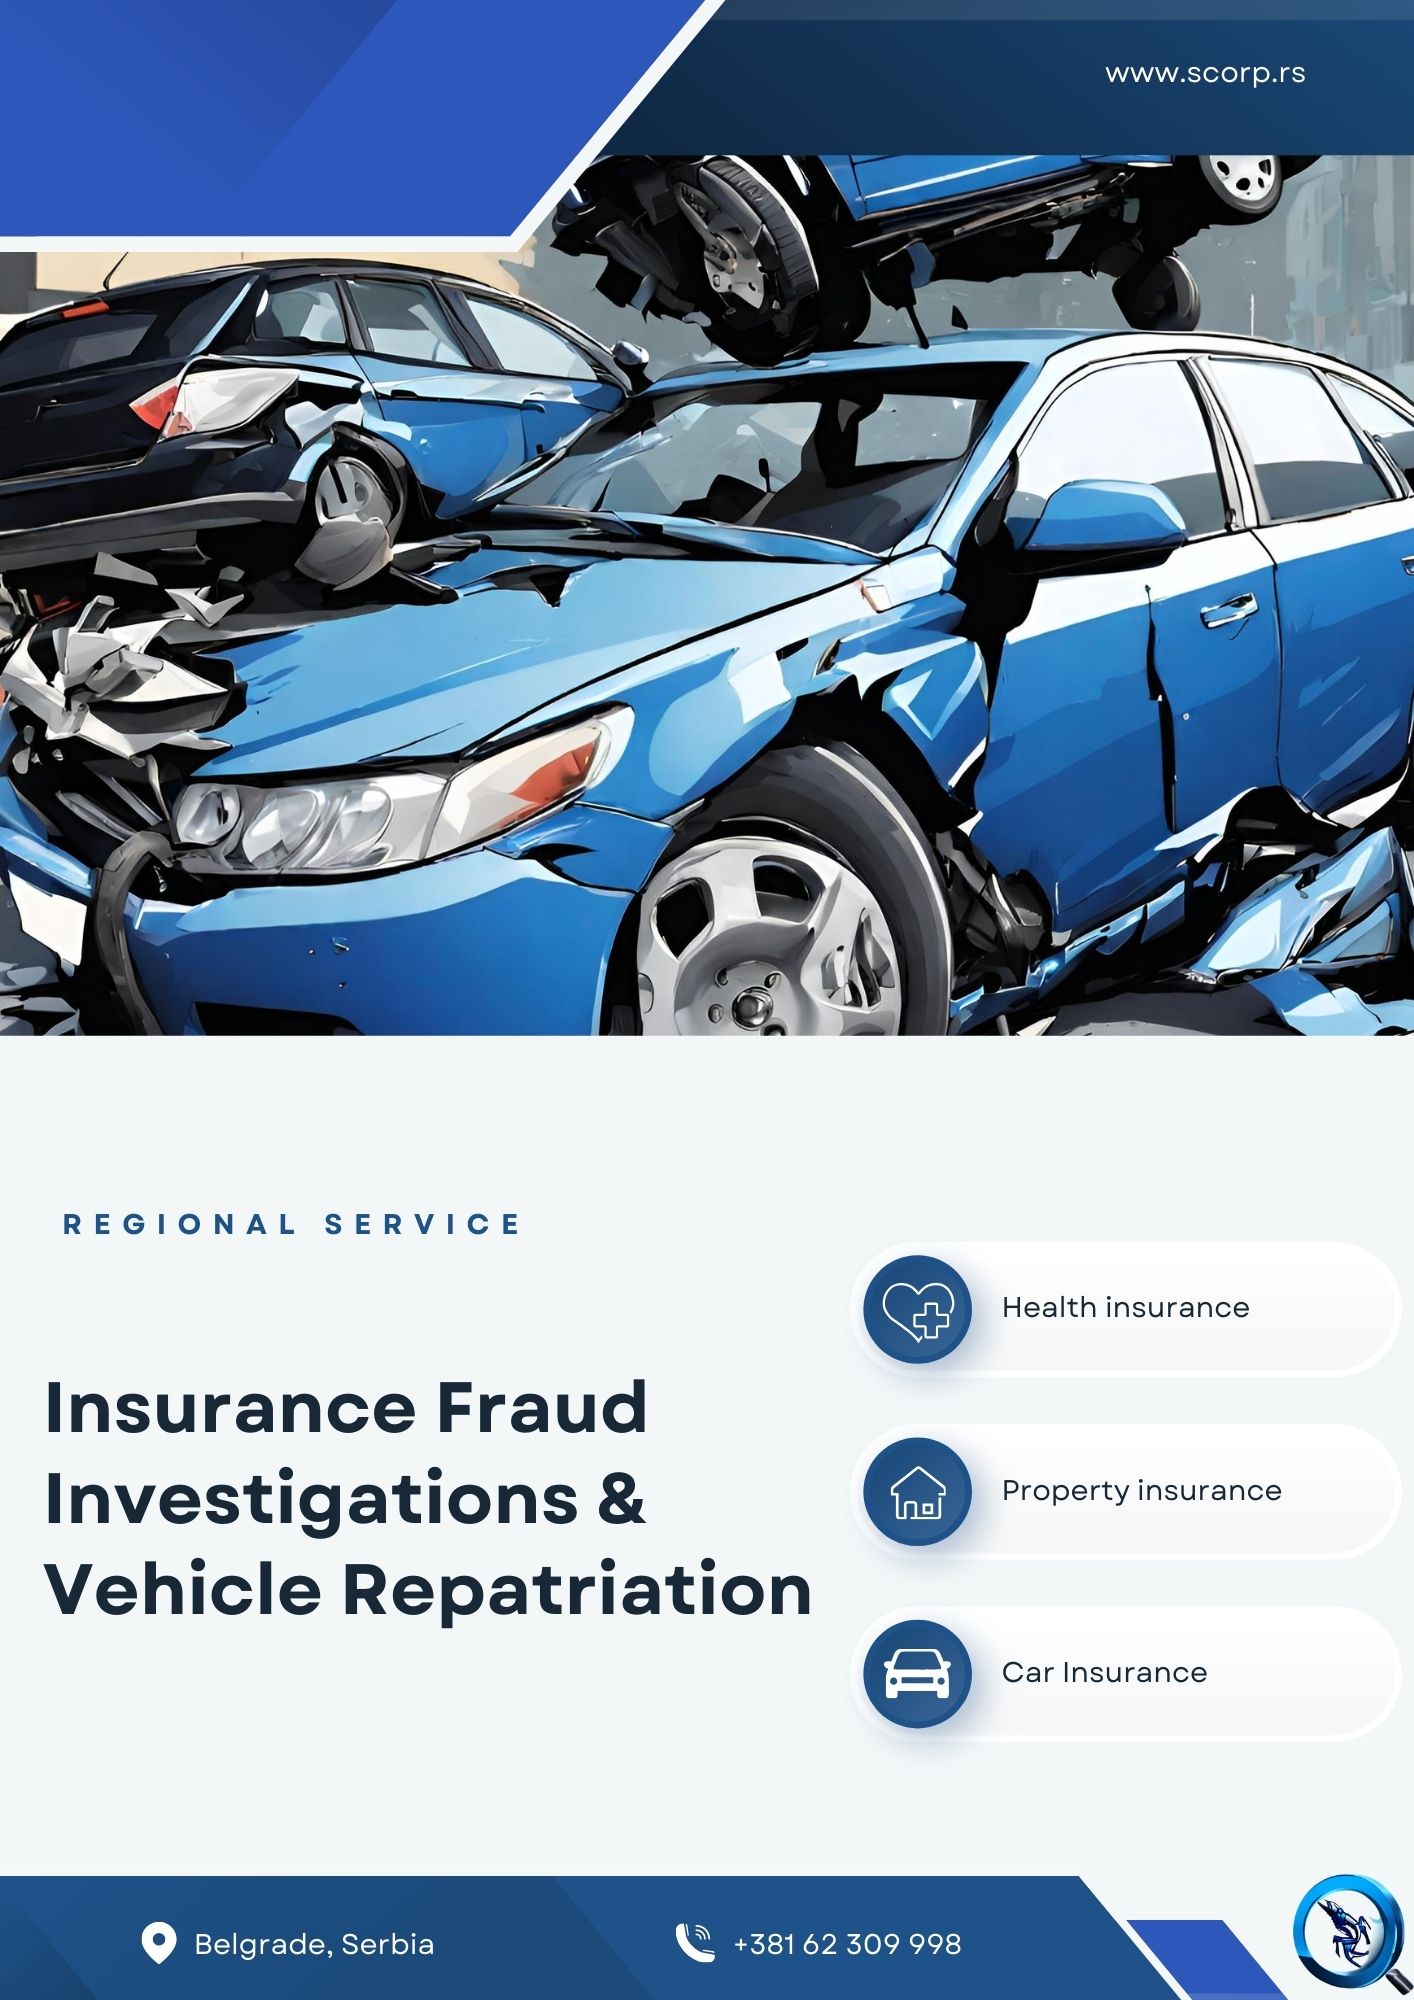 Insurance Fraud & Vehicle Repatriation